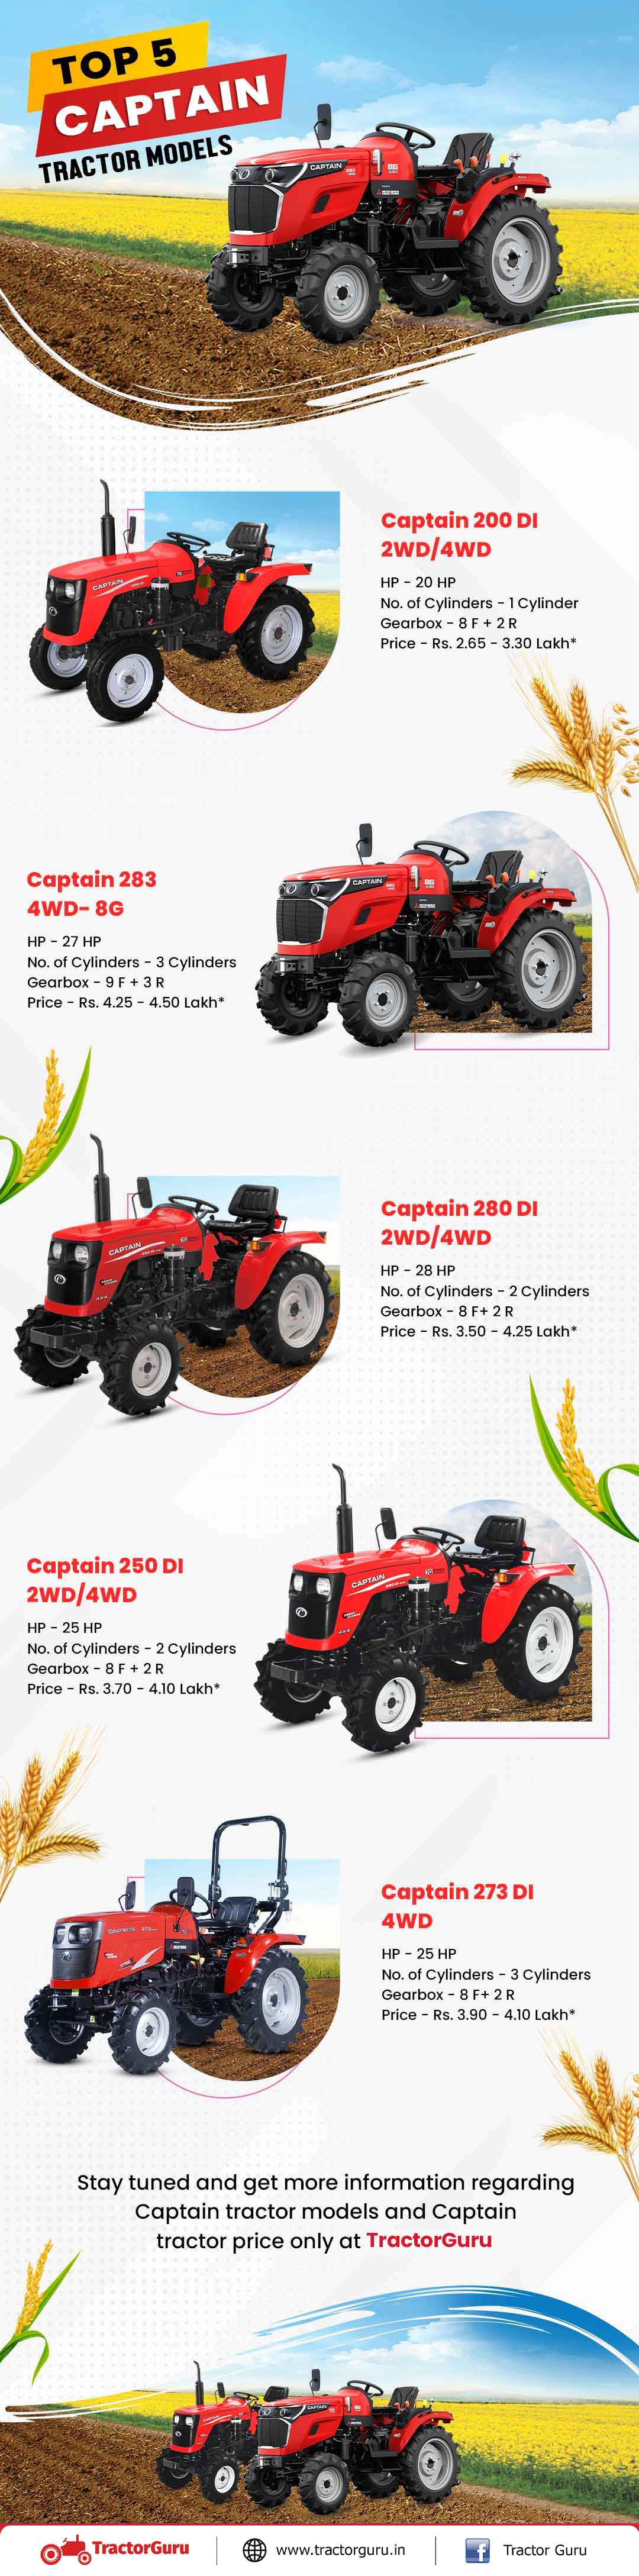 Top 5 Captain Tractor Models